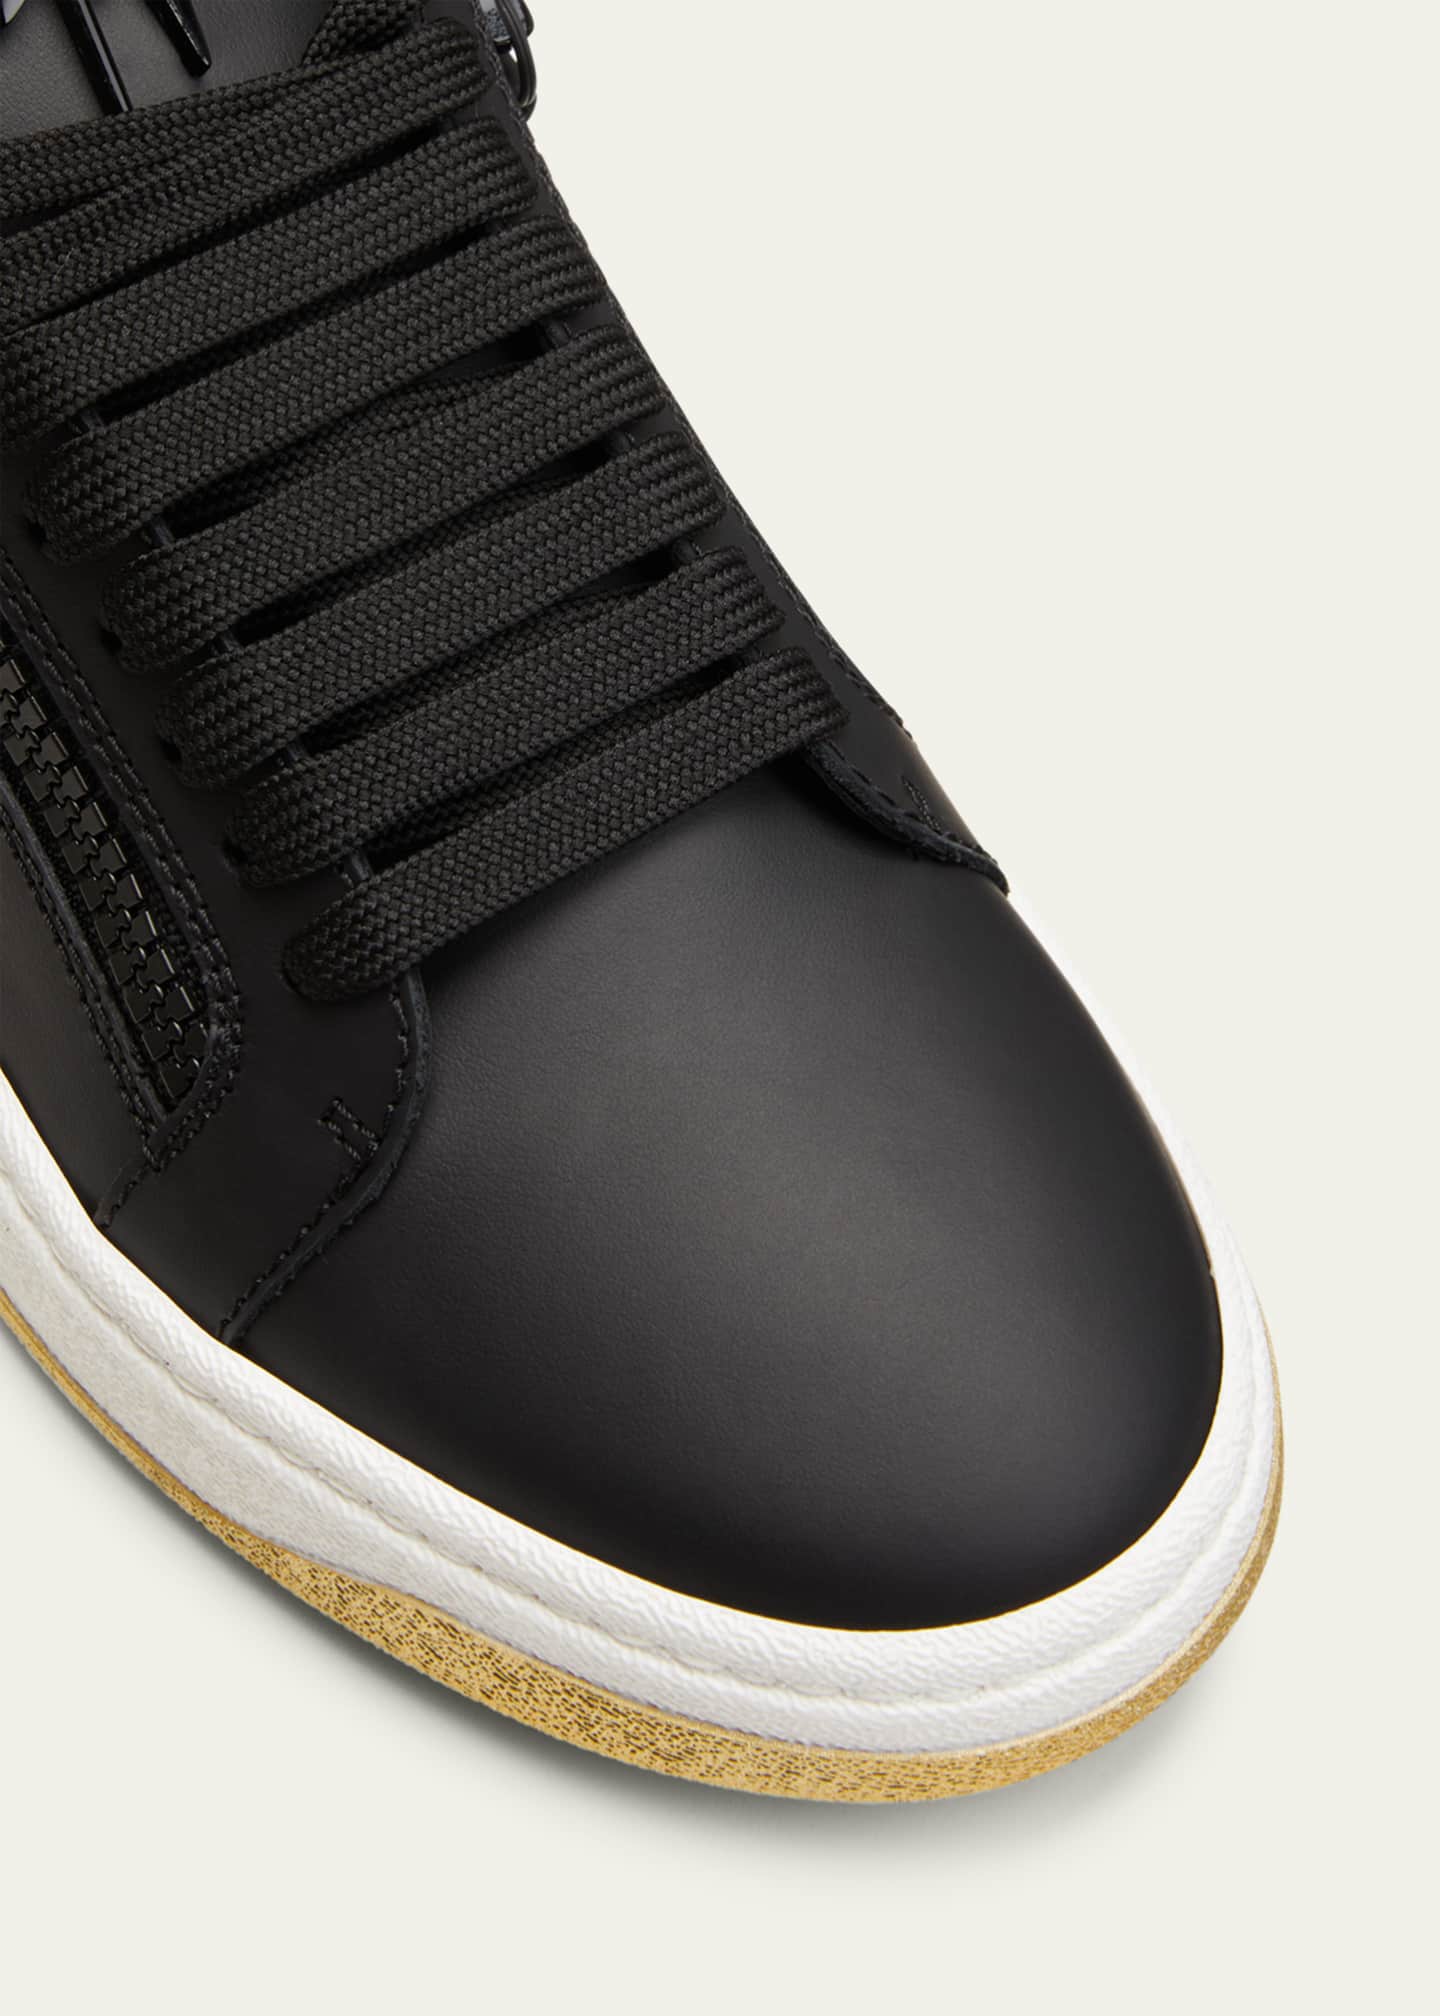 sende tone Grænseværdi Giuseppe Zanotti Men's Double-Zip Leather Sneakers - Bergdorf Goodman